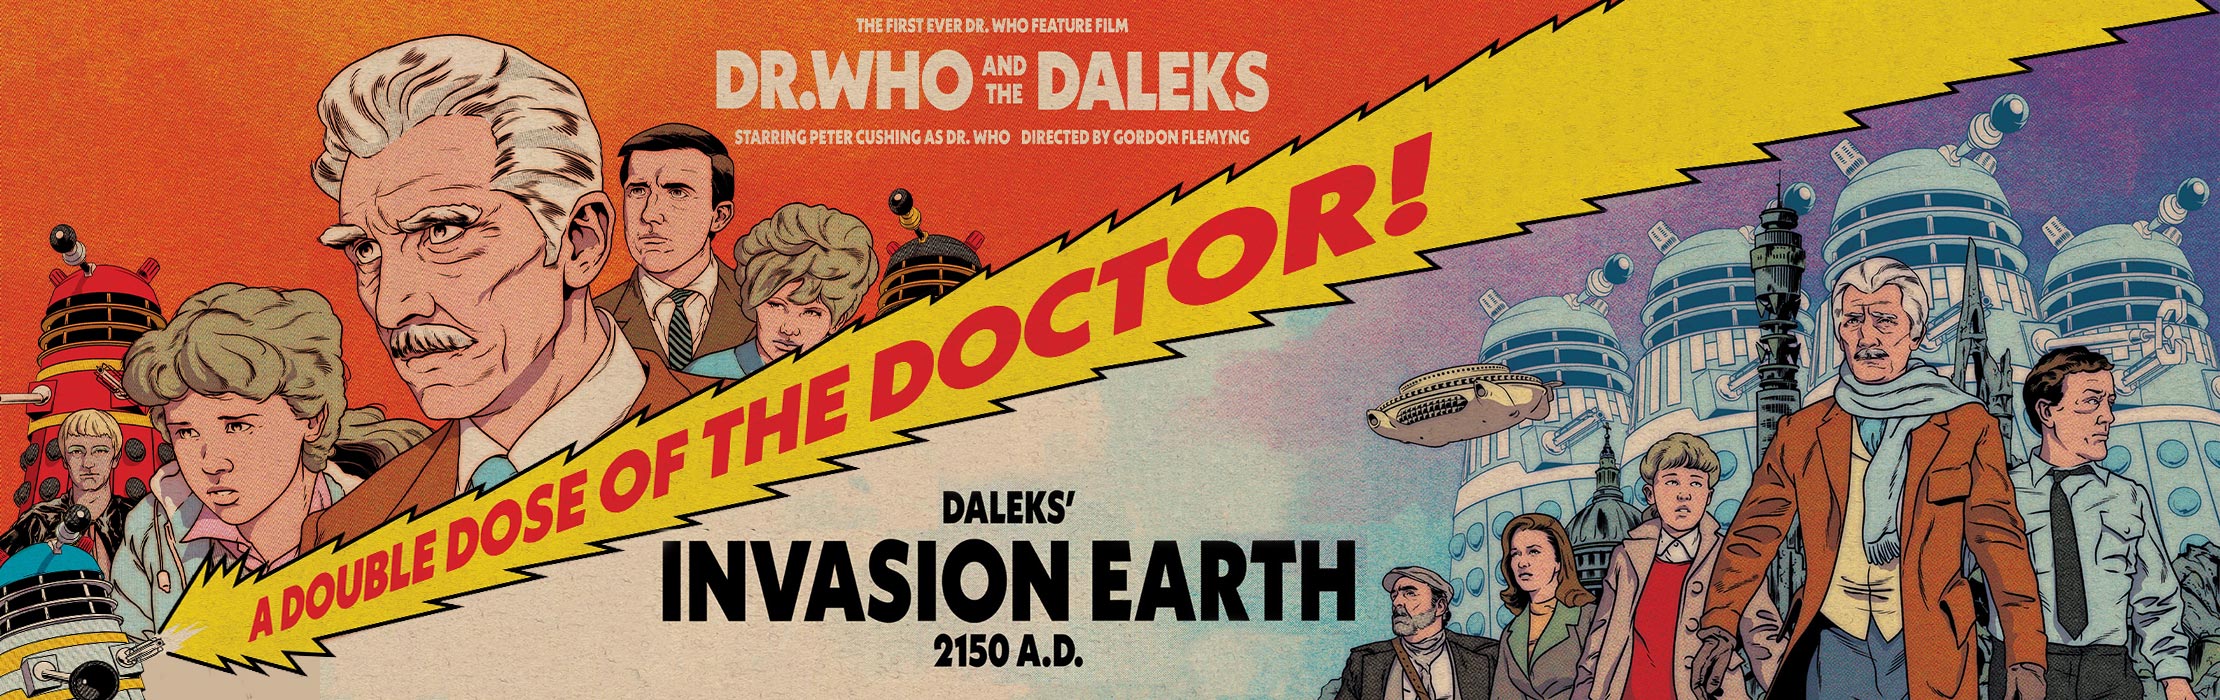 Dr.Who The Daleks Daleks Invasion Earth